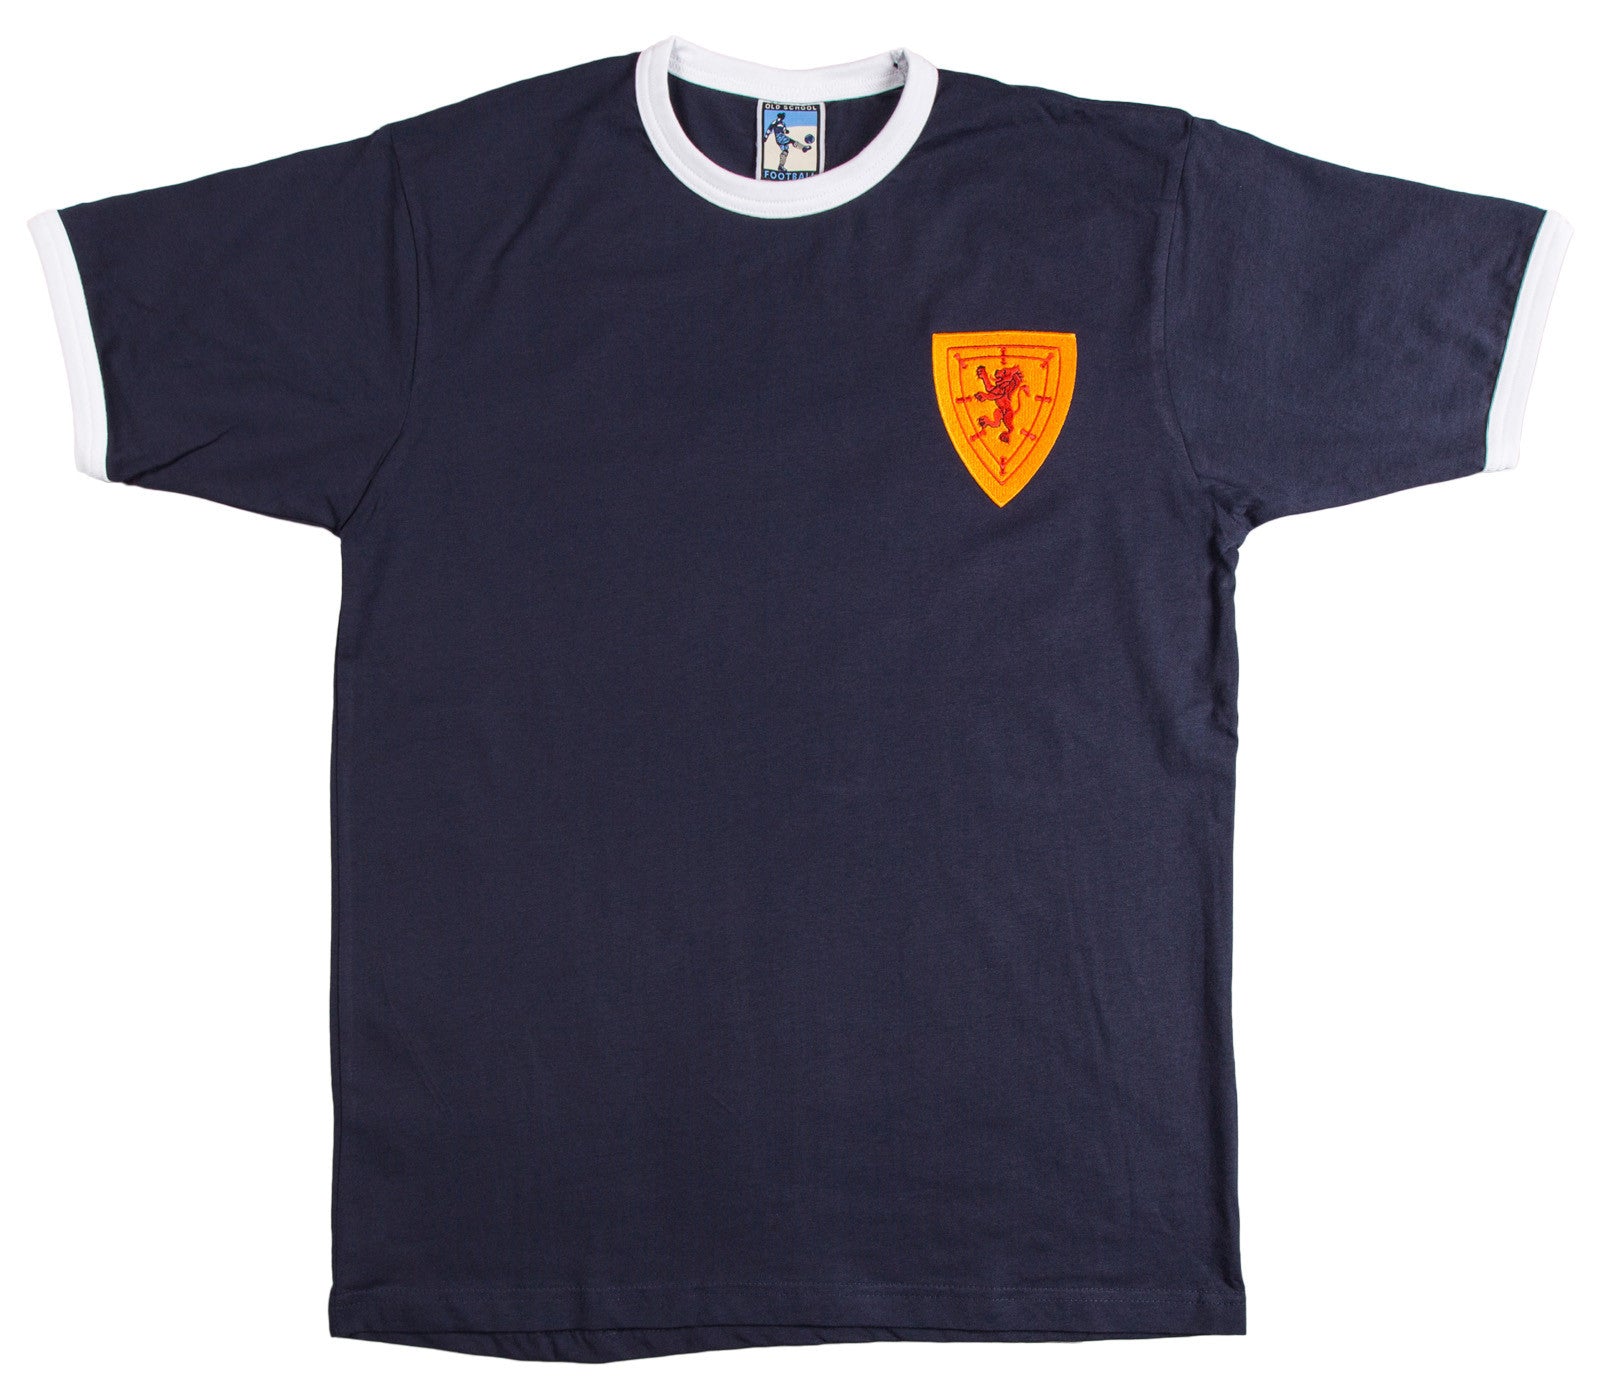 Scotland Retro Football T Shirt 1960s - Old School Football